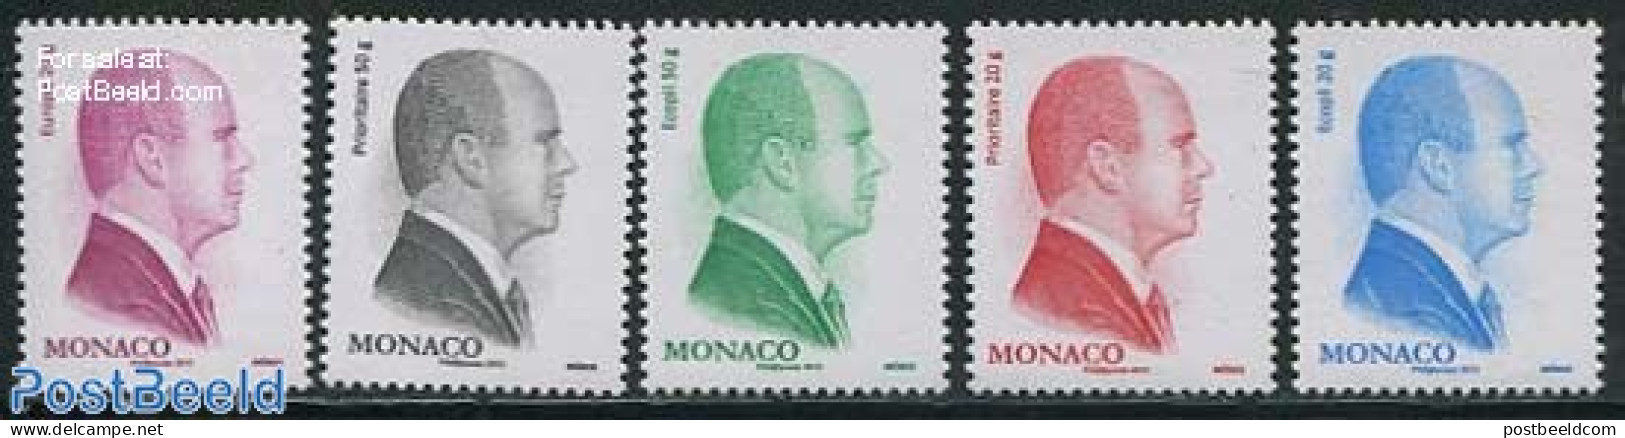 Monaco 2012 Definitives, Albert II 5v, Mint NH - Neufs